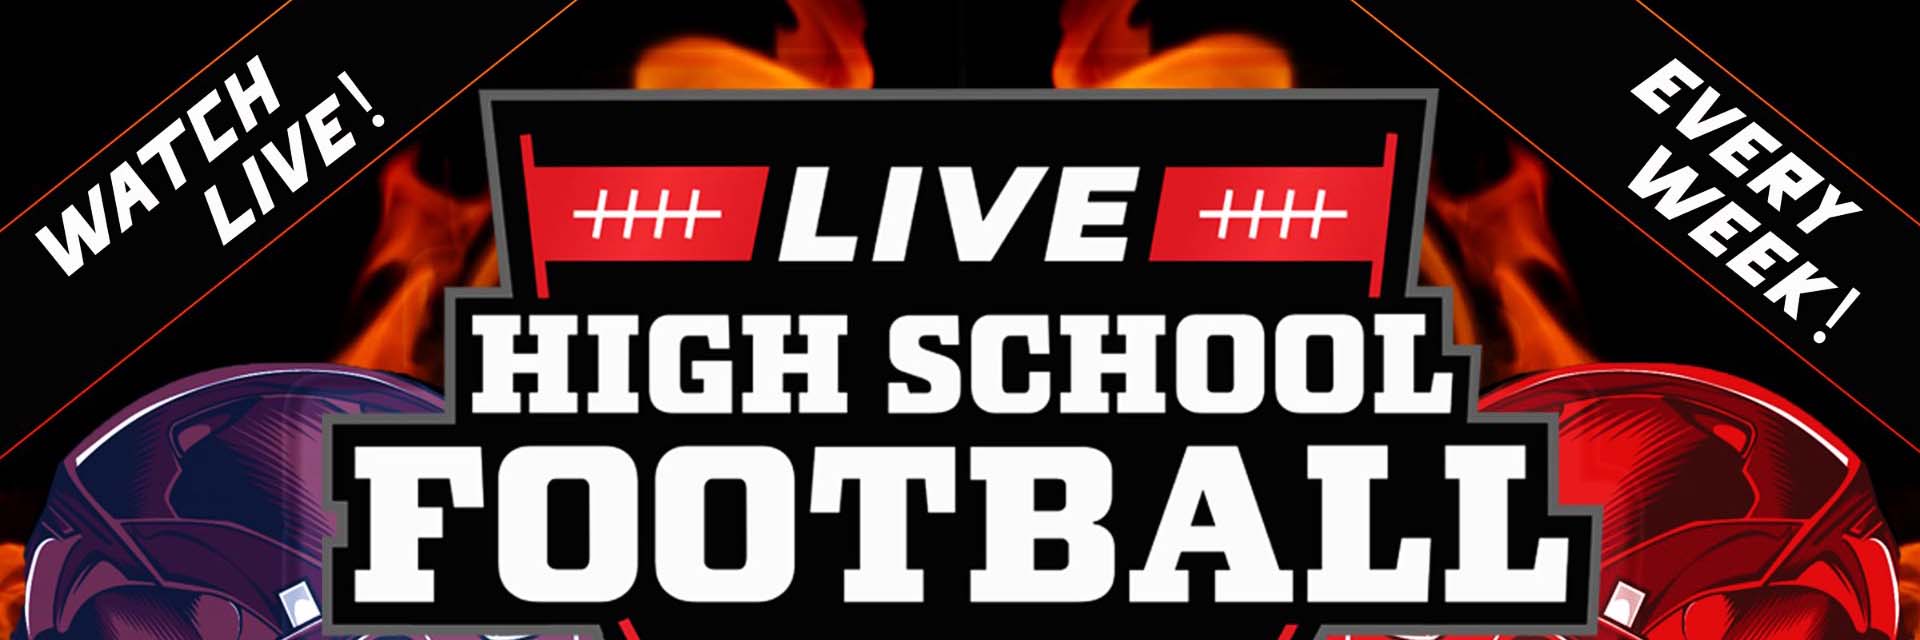 High School Football Live Coverage